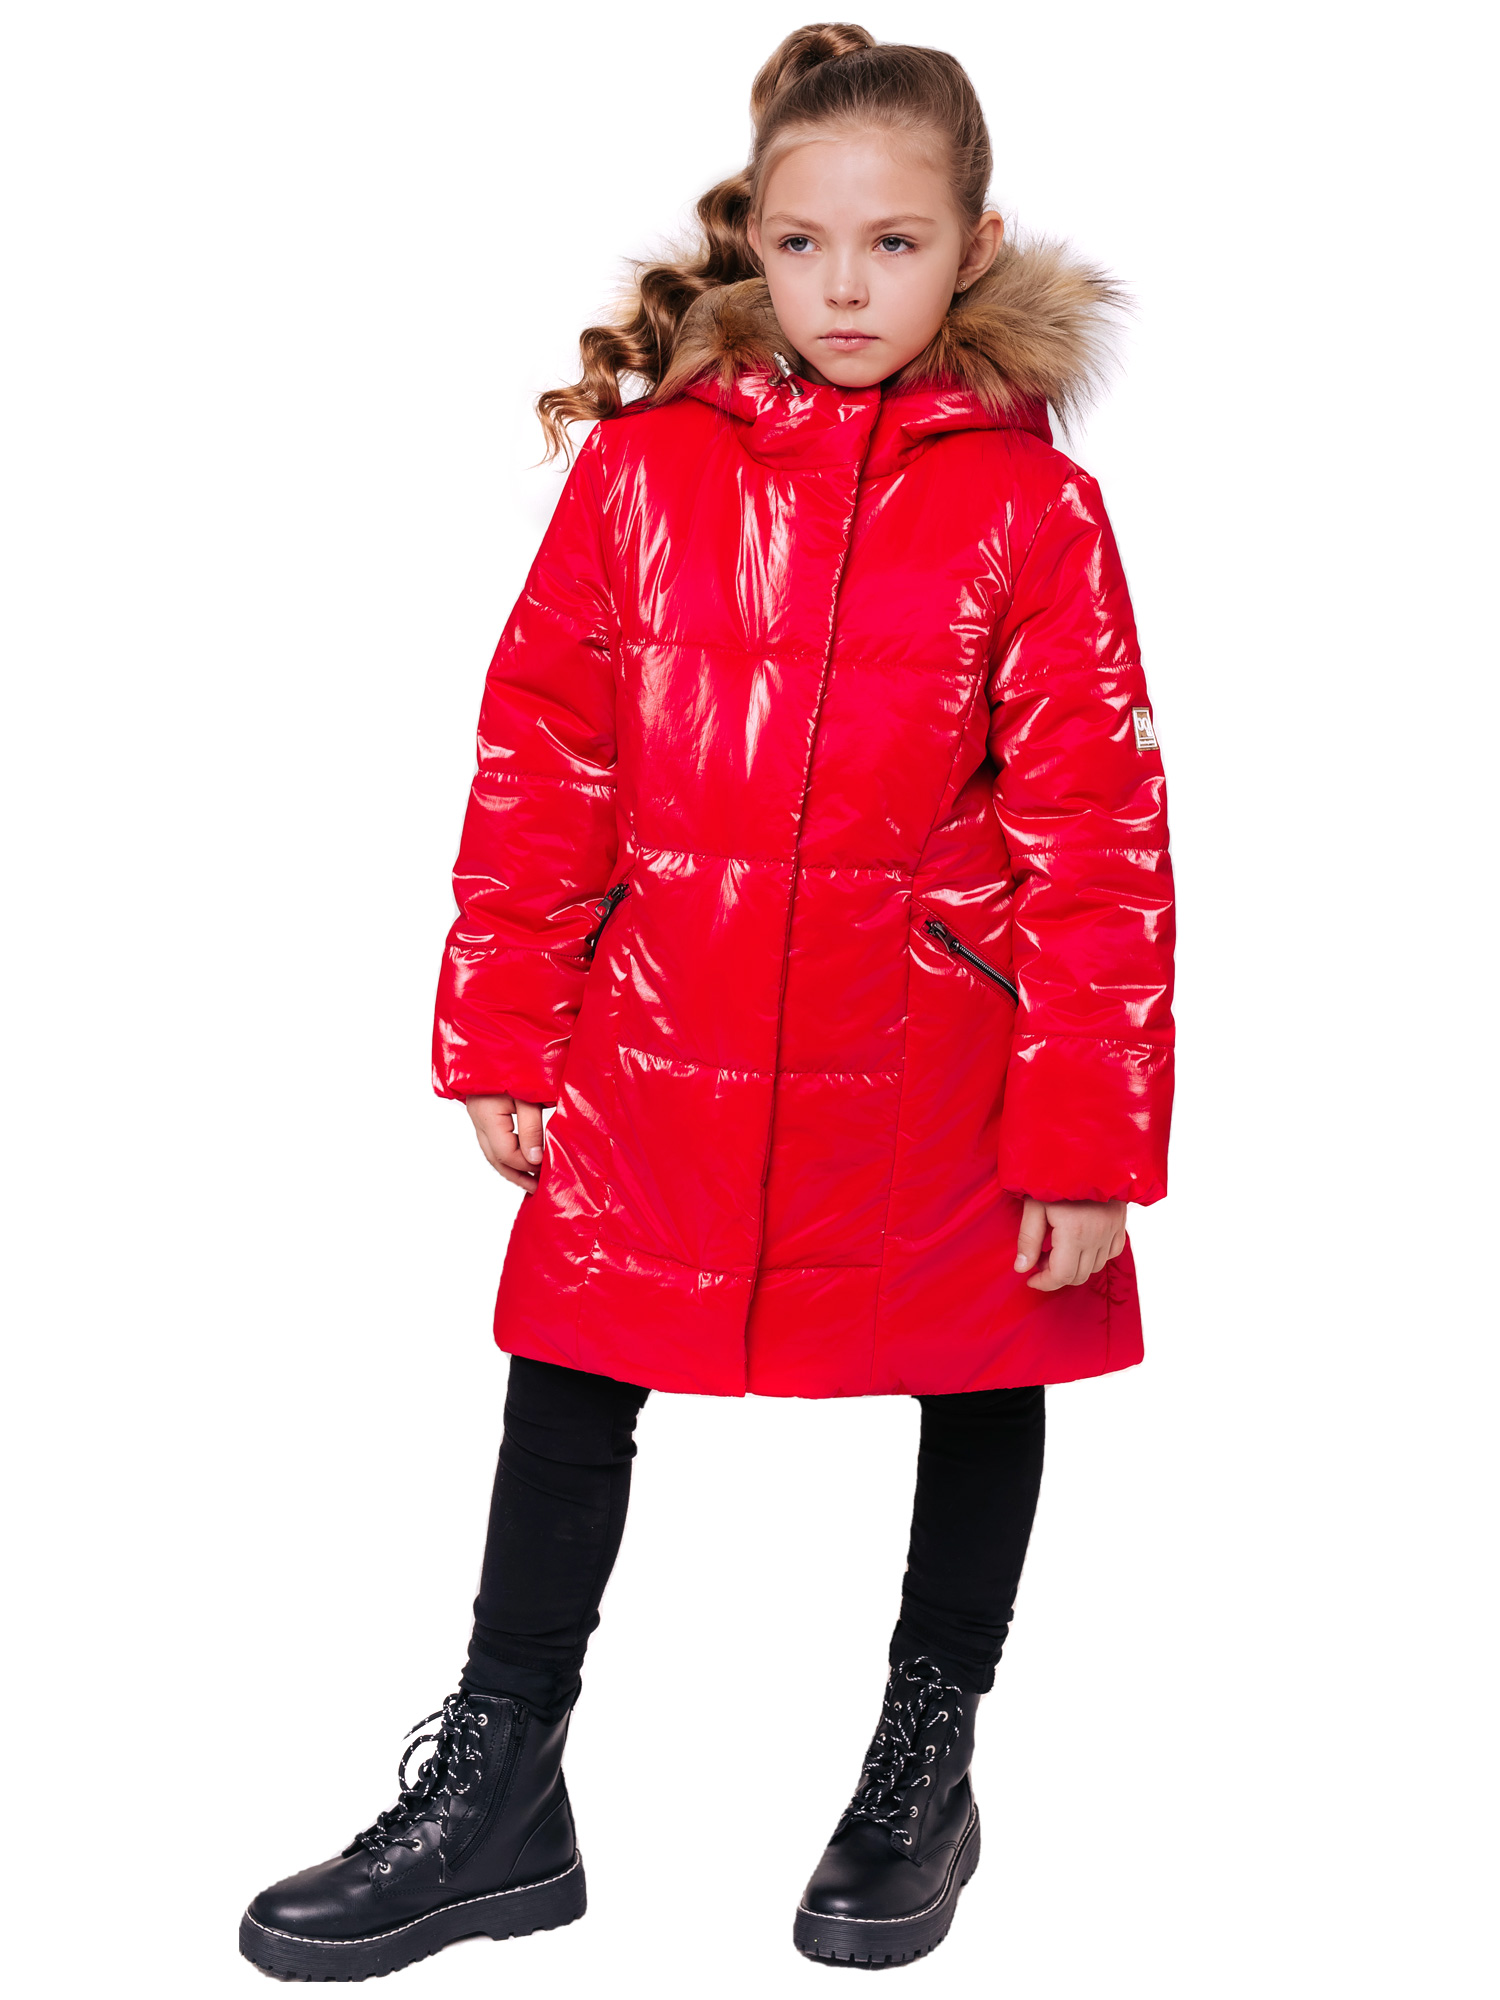 Фото товара Зимнее пальто для девочки Натали 330-21з-1 от Батик